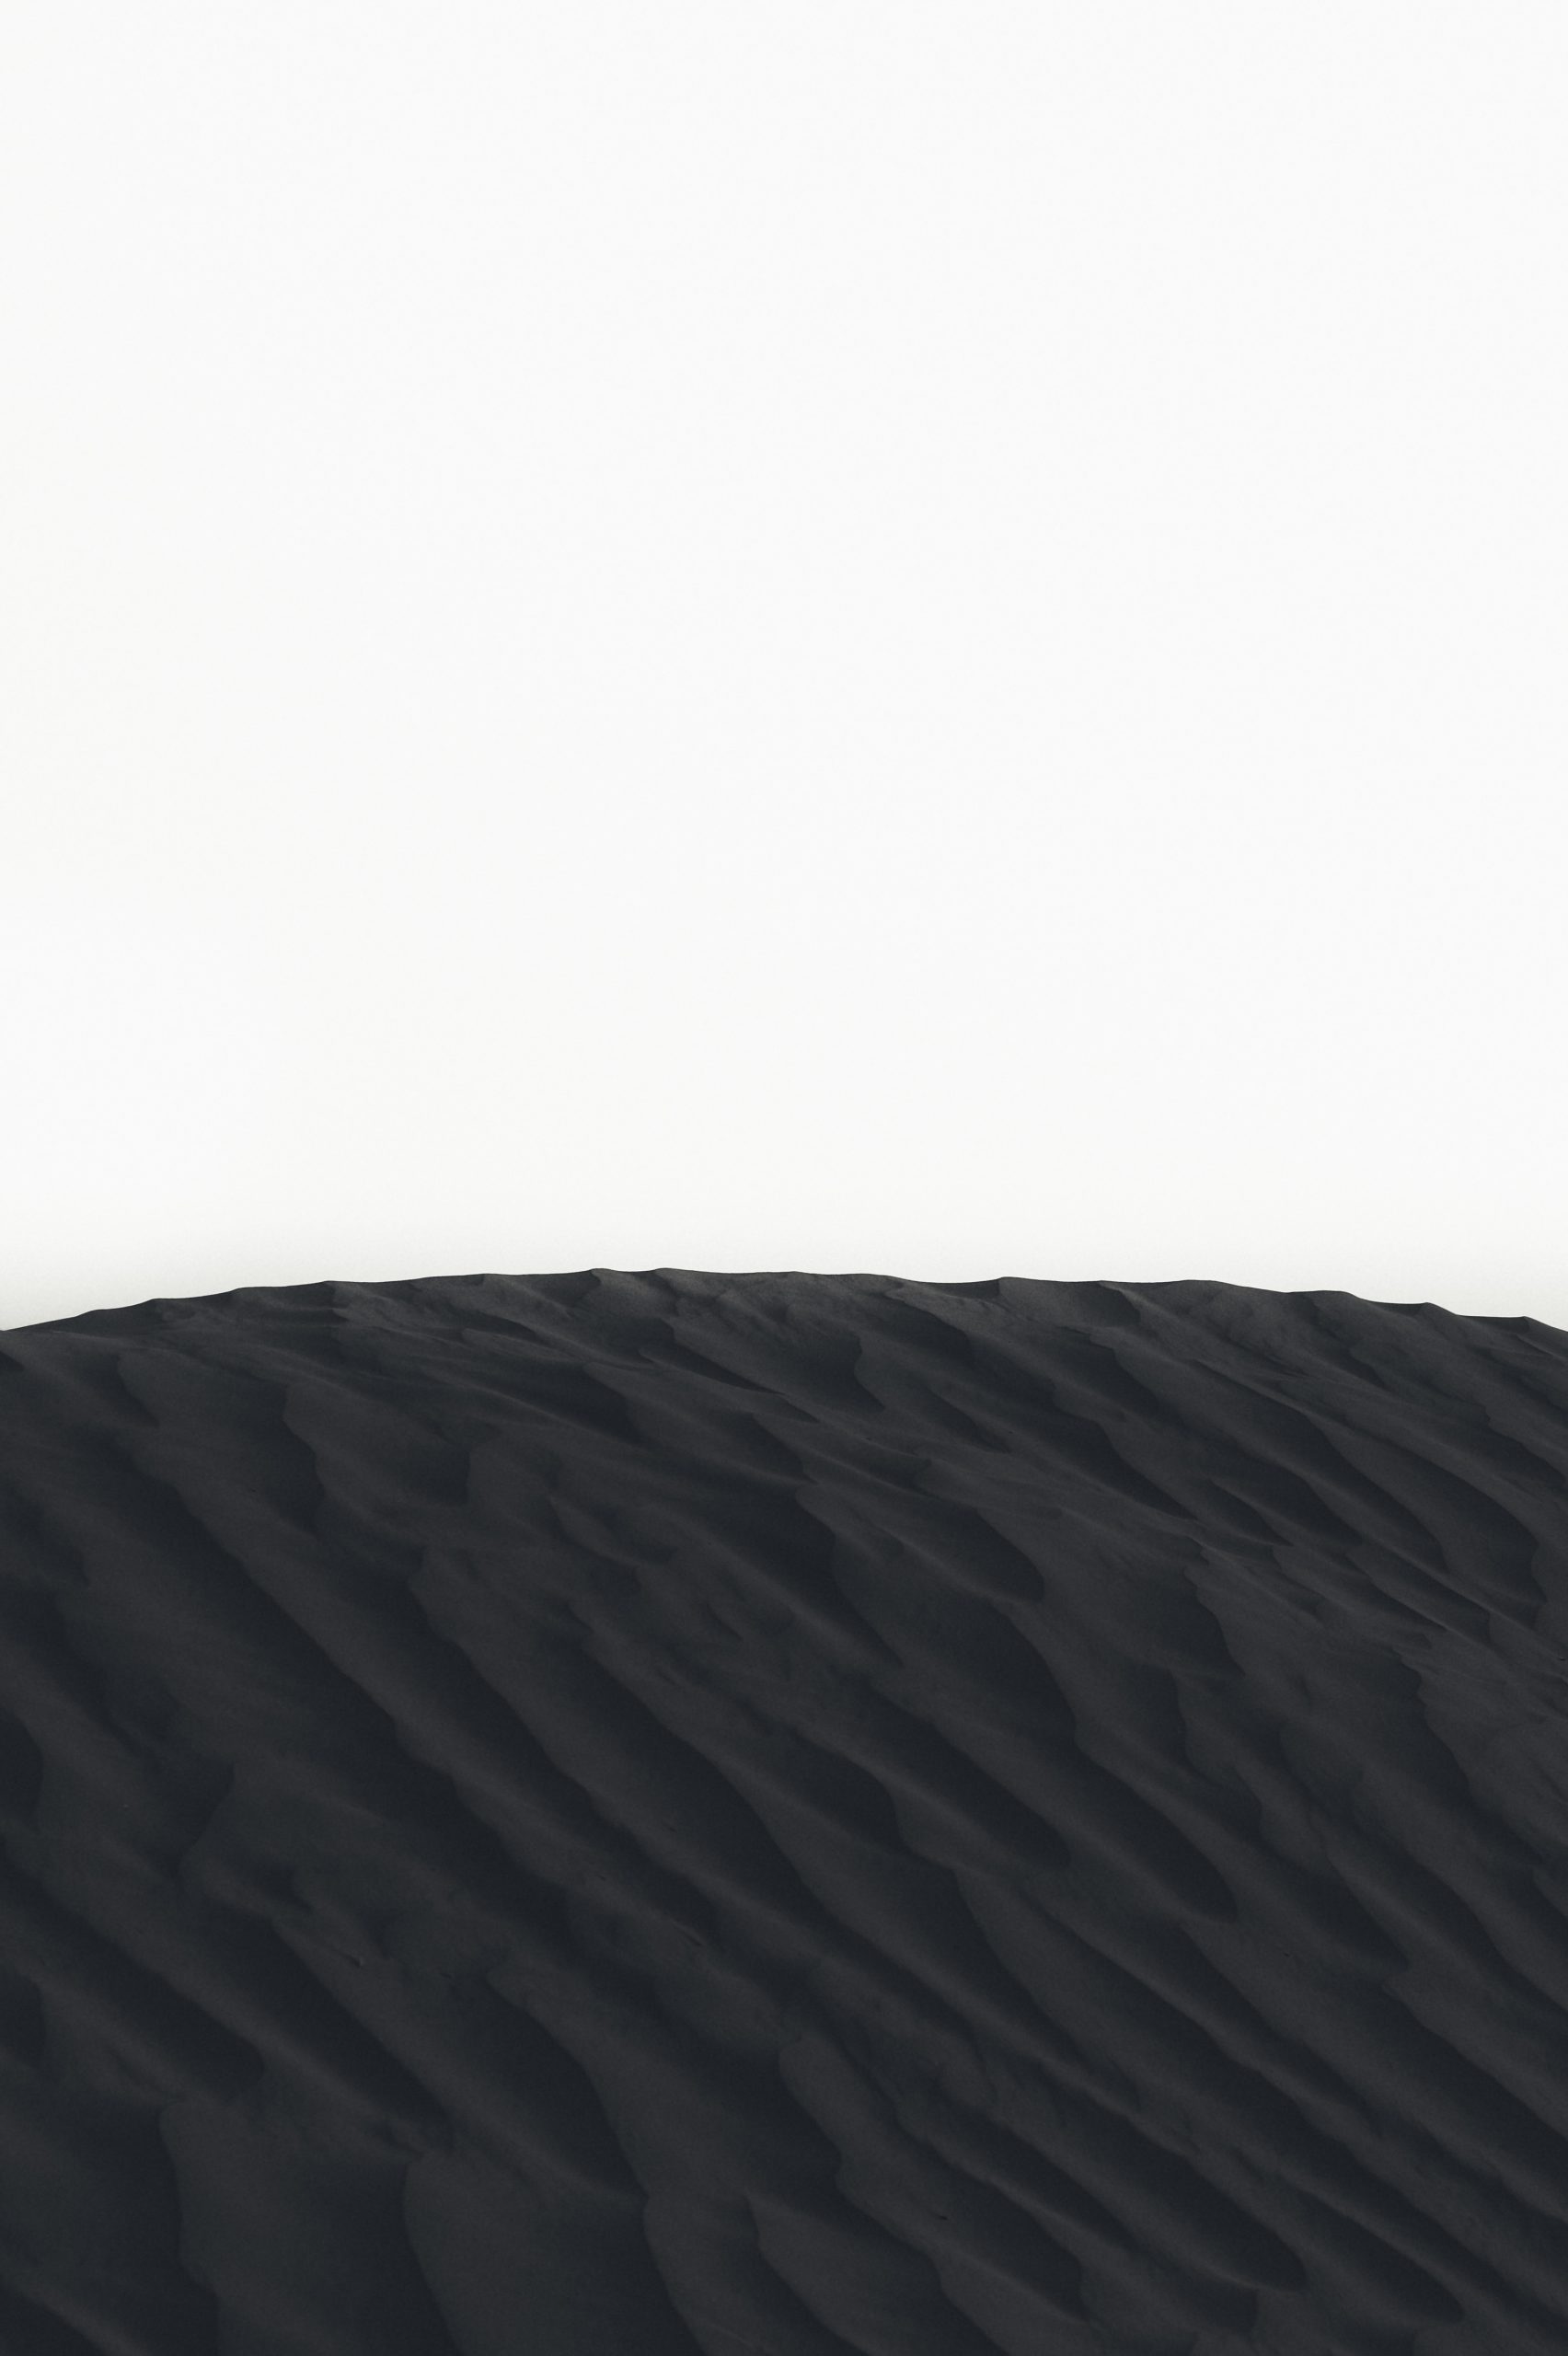 Sand dunes Wallpaper